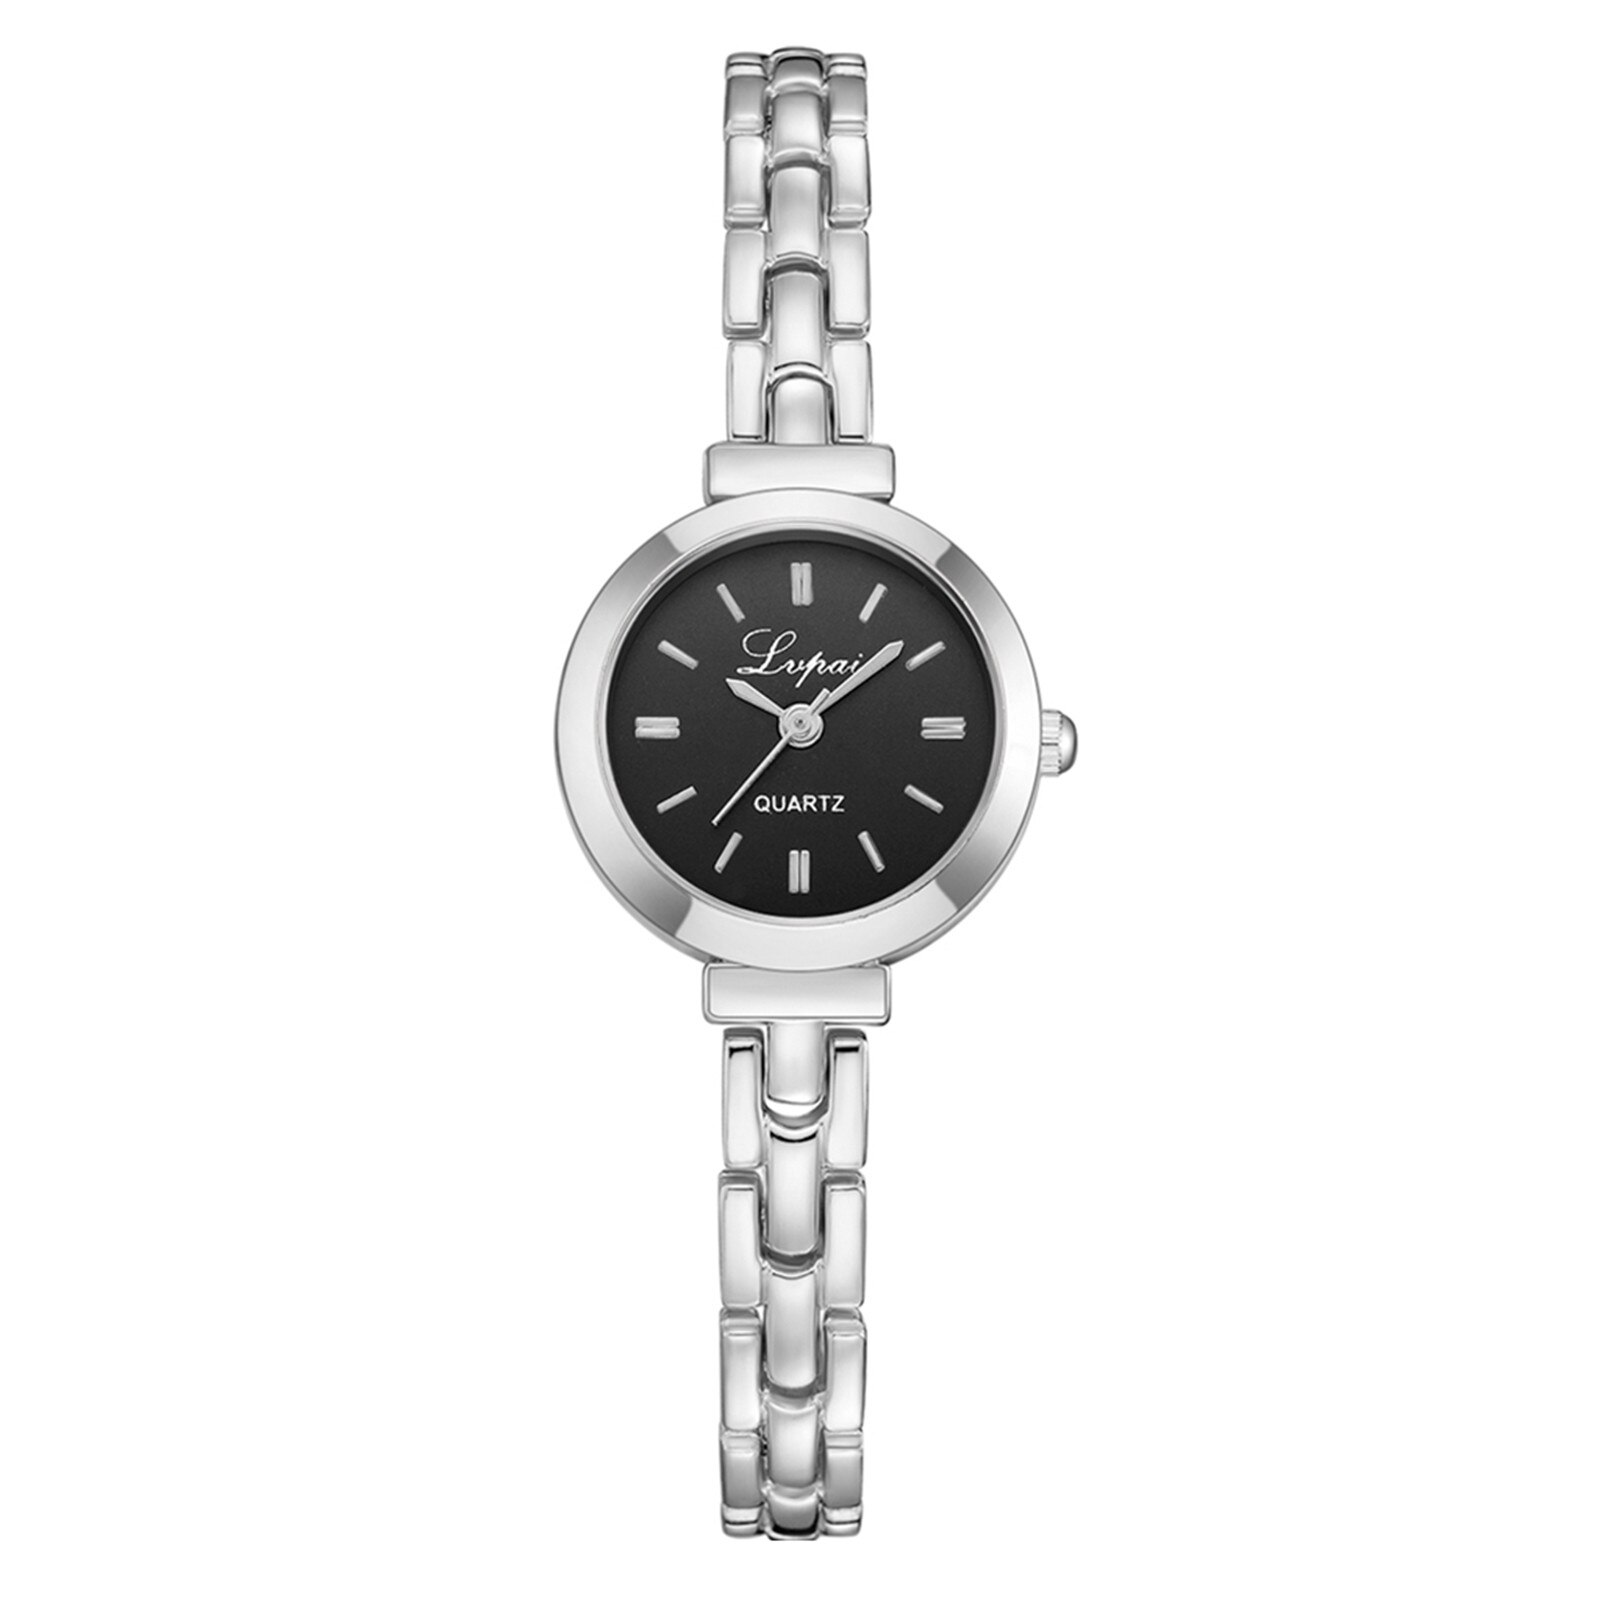 Mode Vrouwelijke Horloges Kleine Eenvoudige Dial Exquise Europese Stijl Leisure Horloge Armband Horloge Pak Dames Horloges